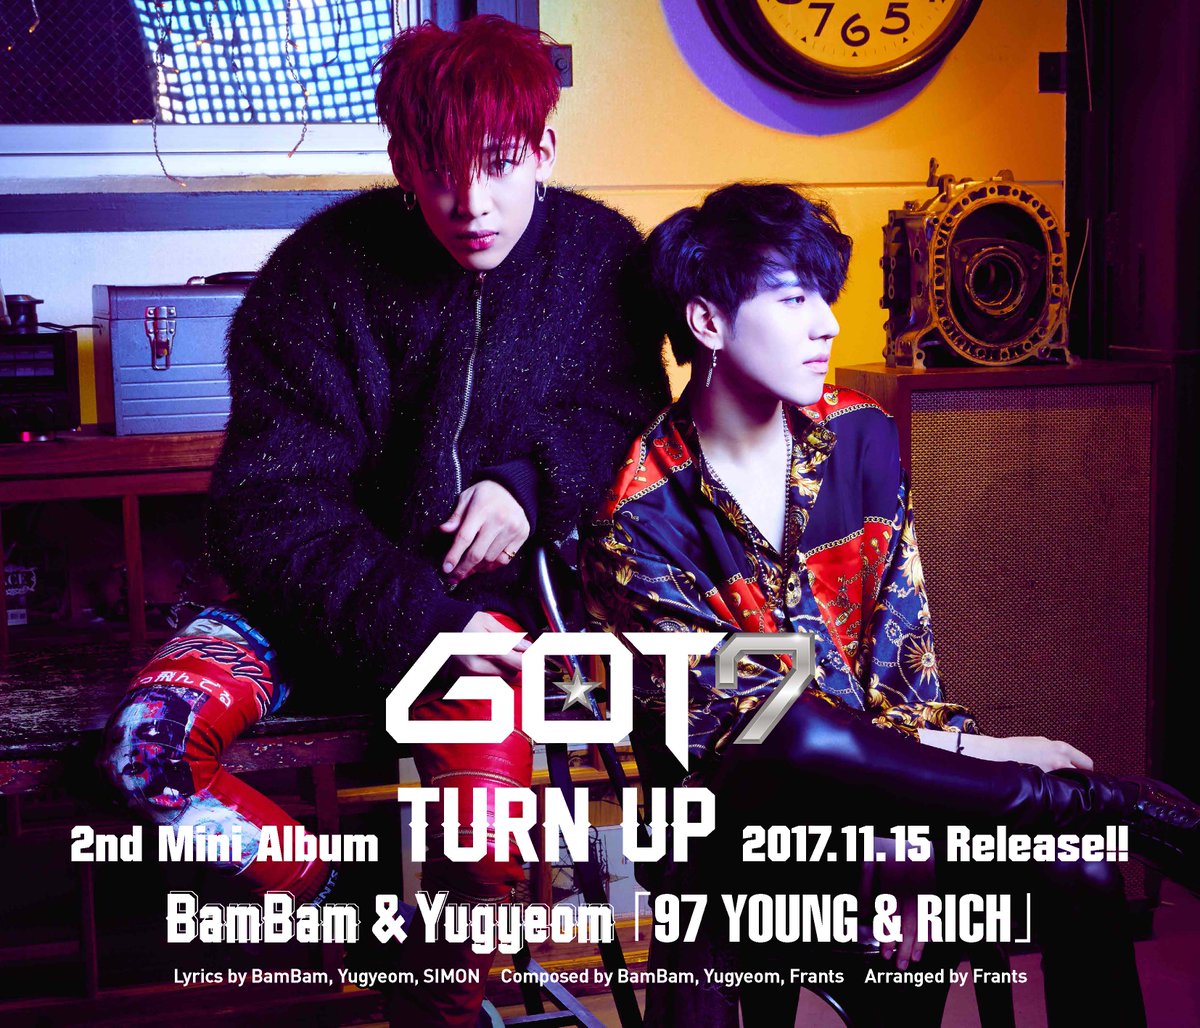 GOT7 2nd Mini Album <TURN UP>
Release Date: 2017. 11. 15
 
BamBam & Yugyeom
「97 YOUNG & RICH」

got7japan.com
 
#GOT7 #TURNUP